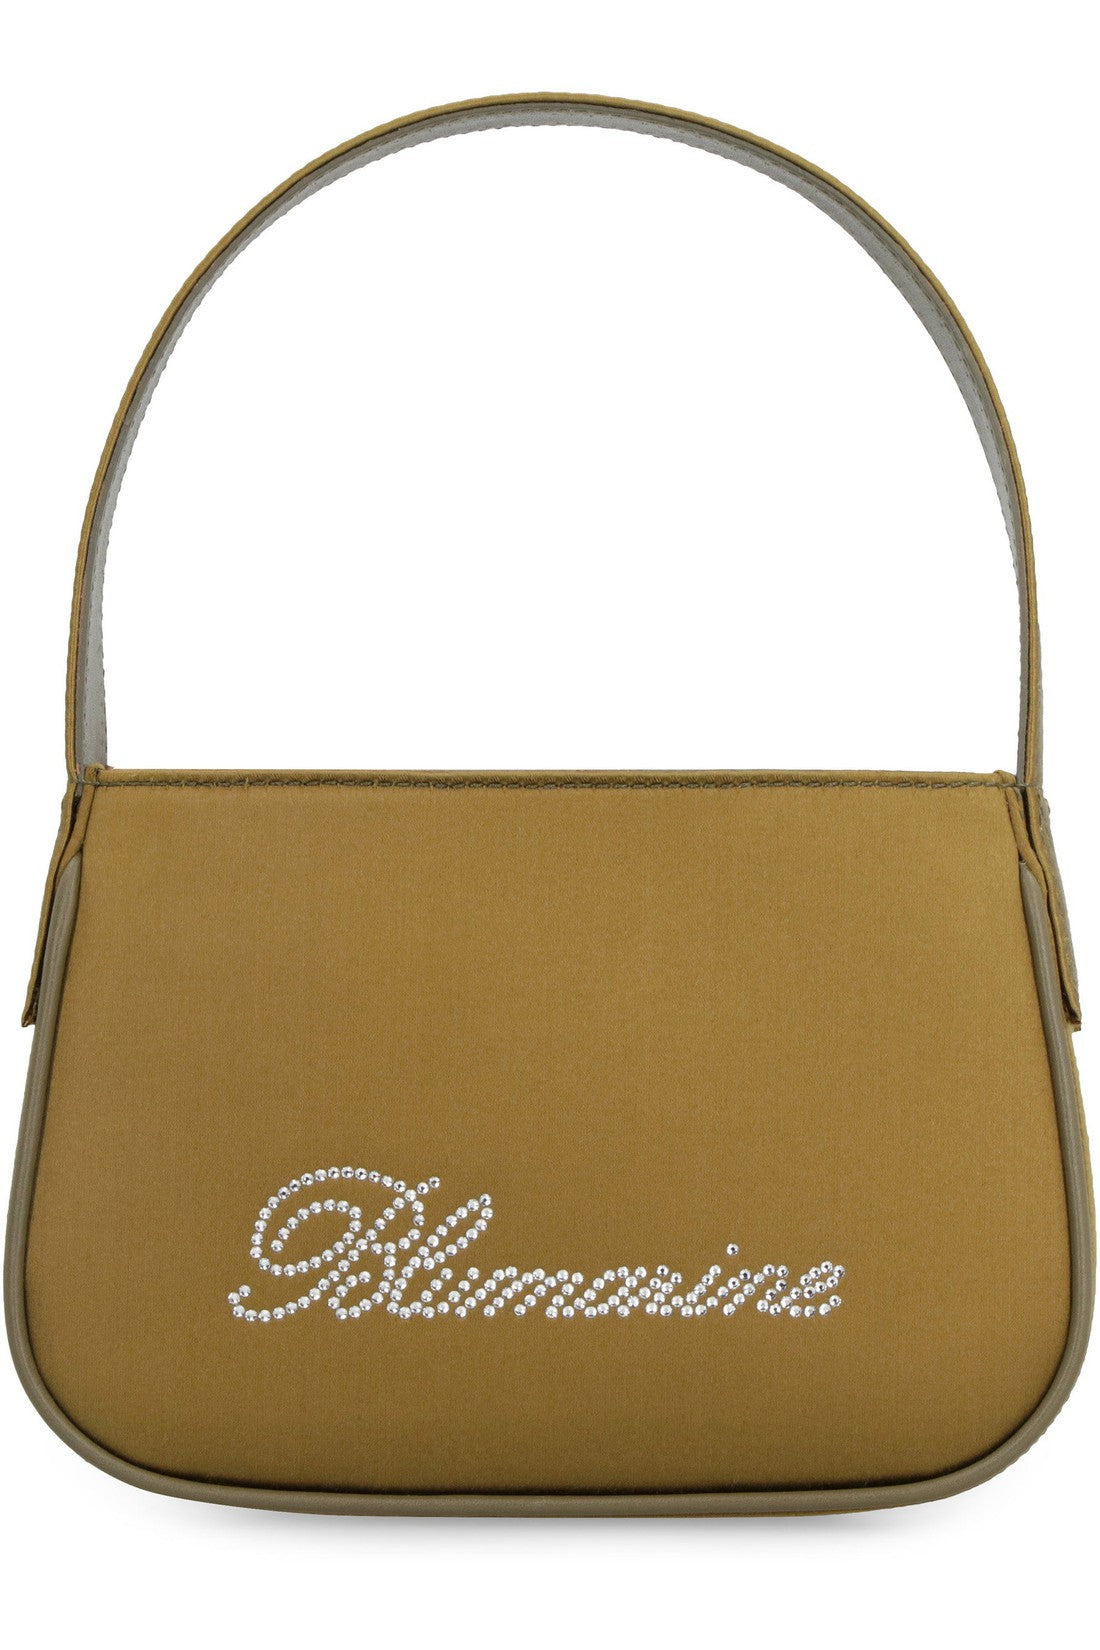 Blumarine-OUTLET-SALE-Satin handbag-ARCHIVIST